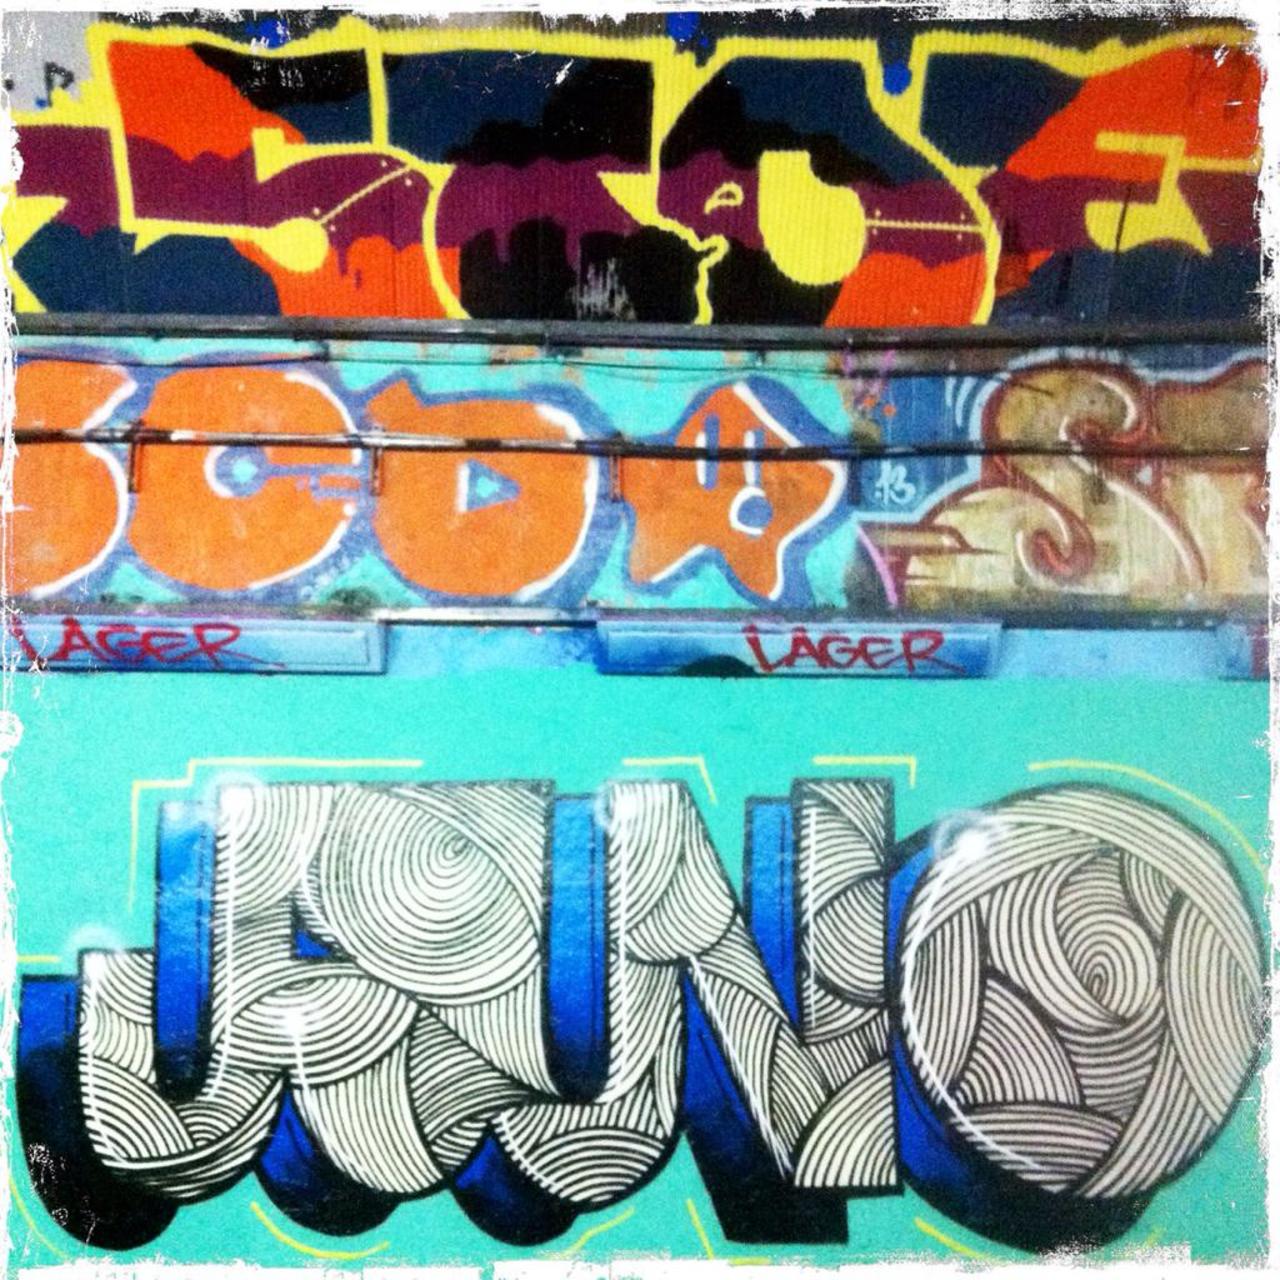 JANO #LeakeStreet (think its jano..)... #art #streetart #graffiti http://t.co/XctAX2tC1A